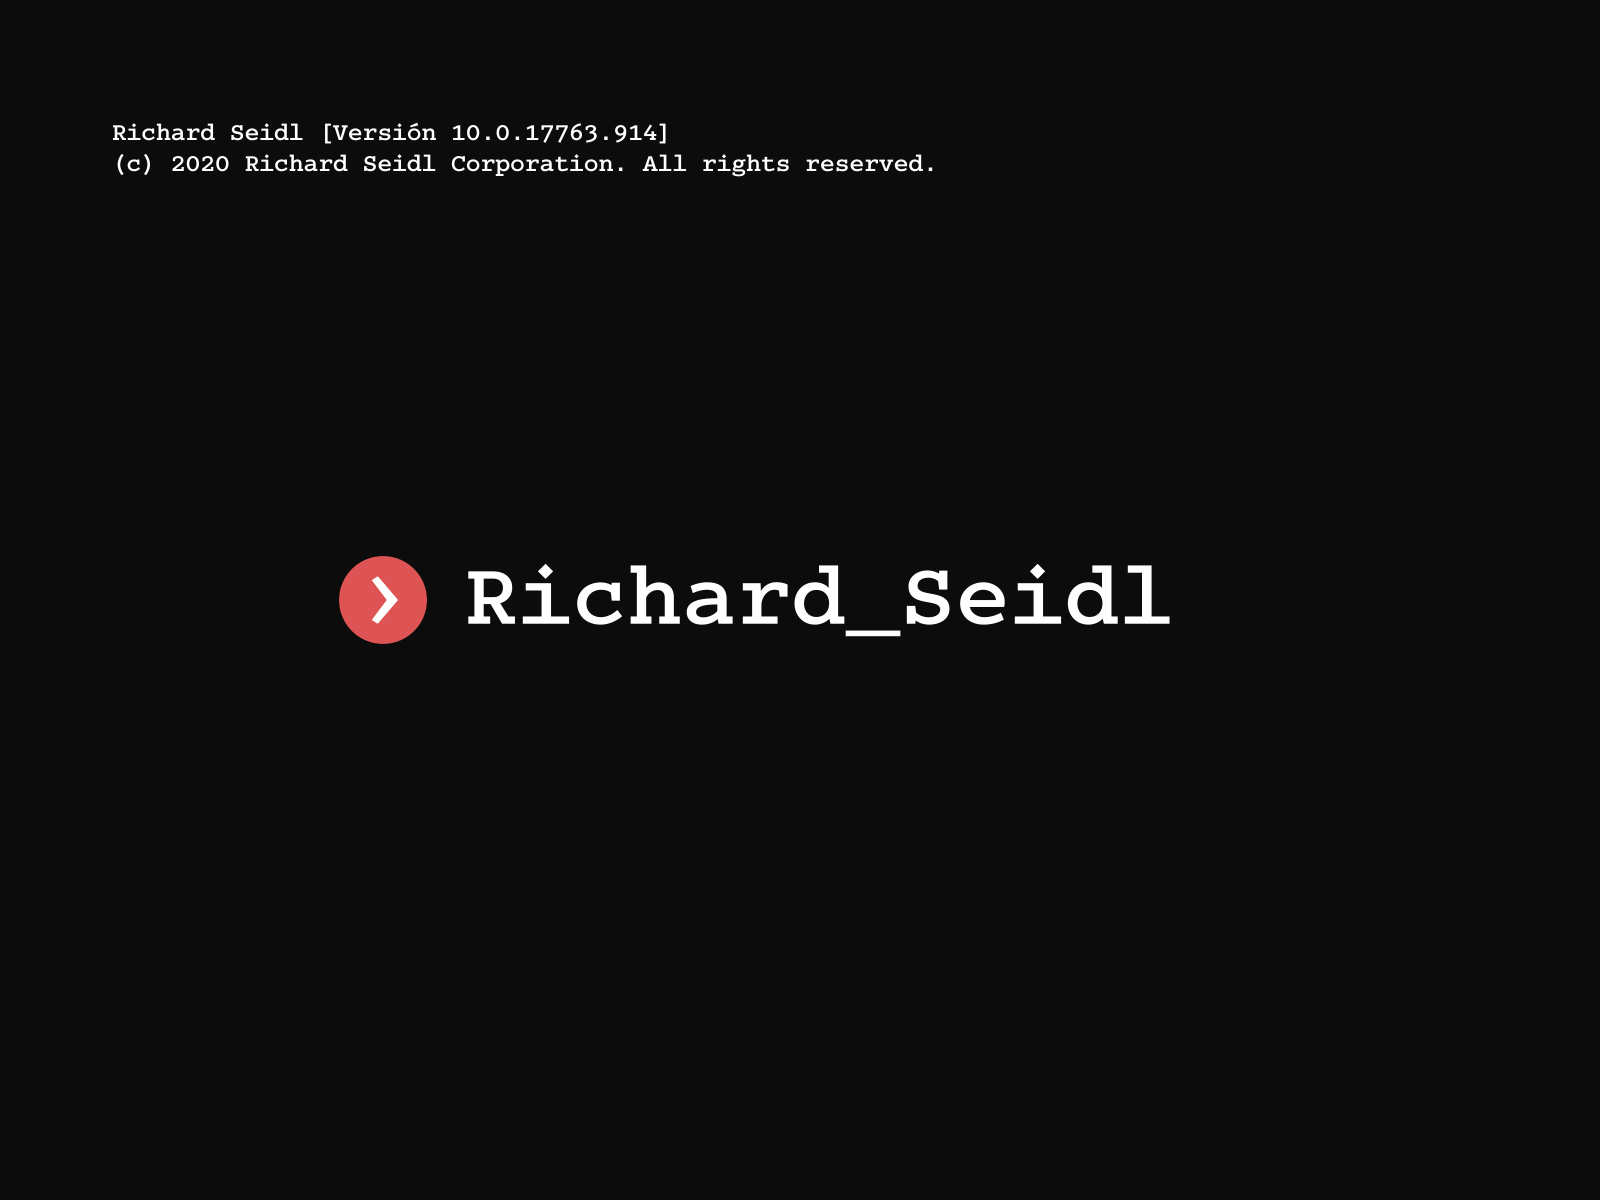 Richard Seidl code dos logo programmer tech